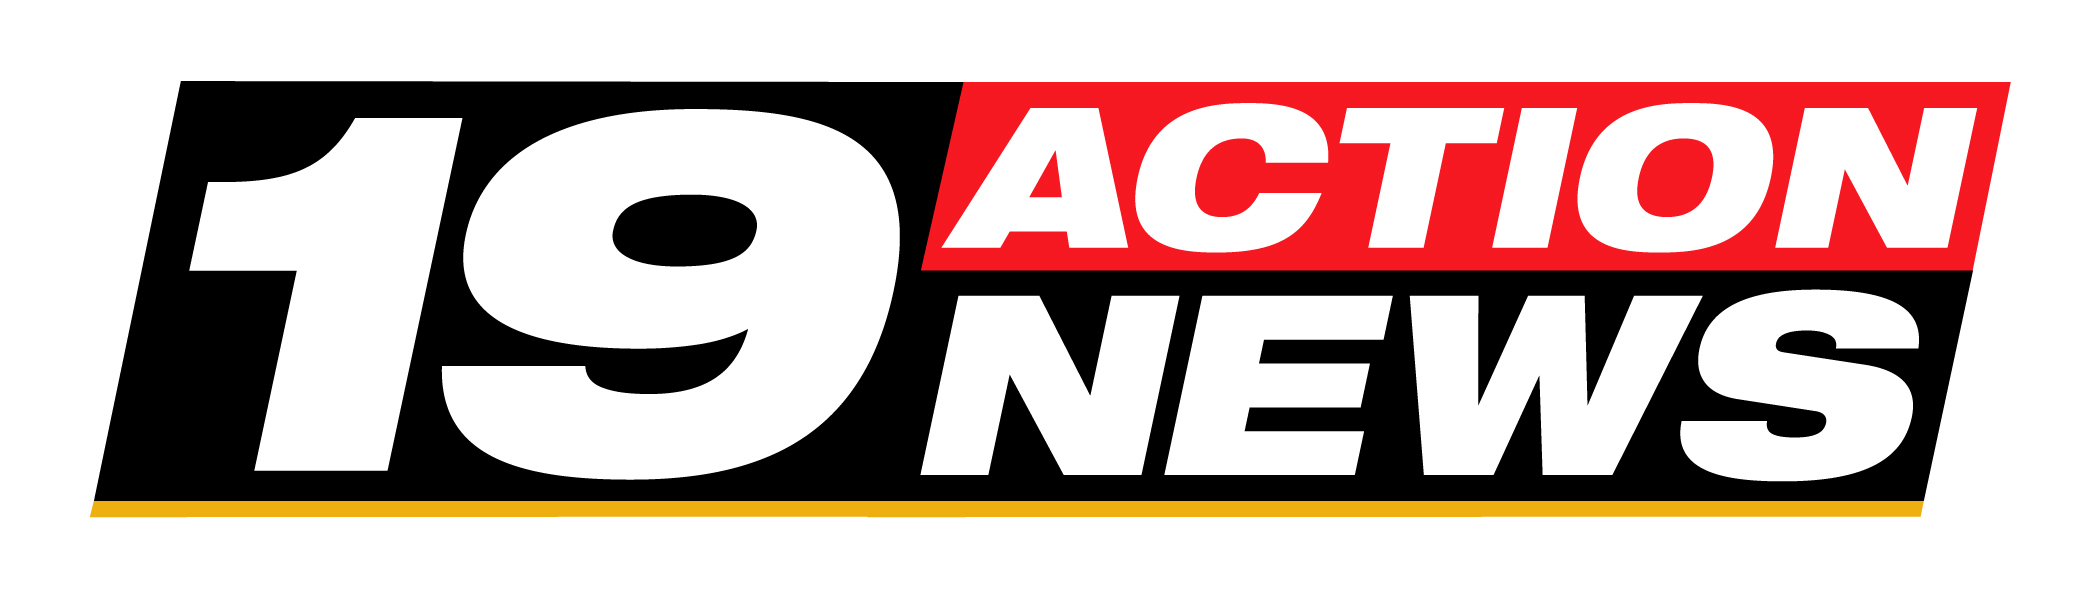 2012-01-25-19_Action_News_logo_300_dpi.jpg